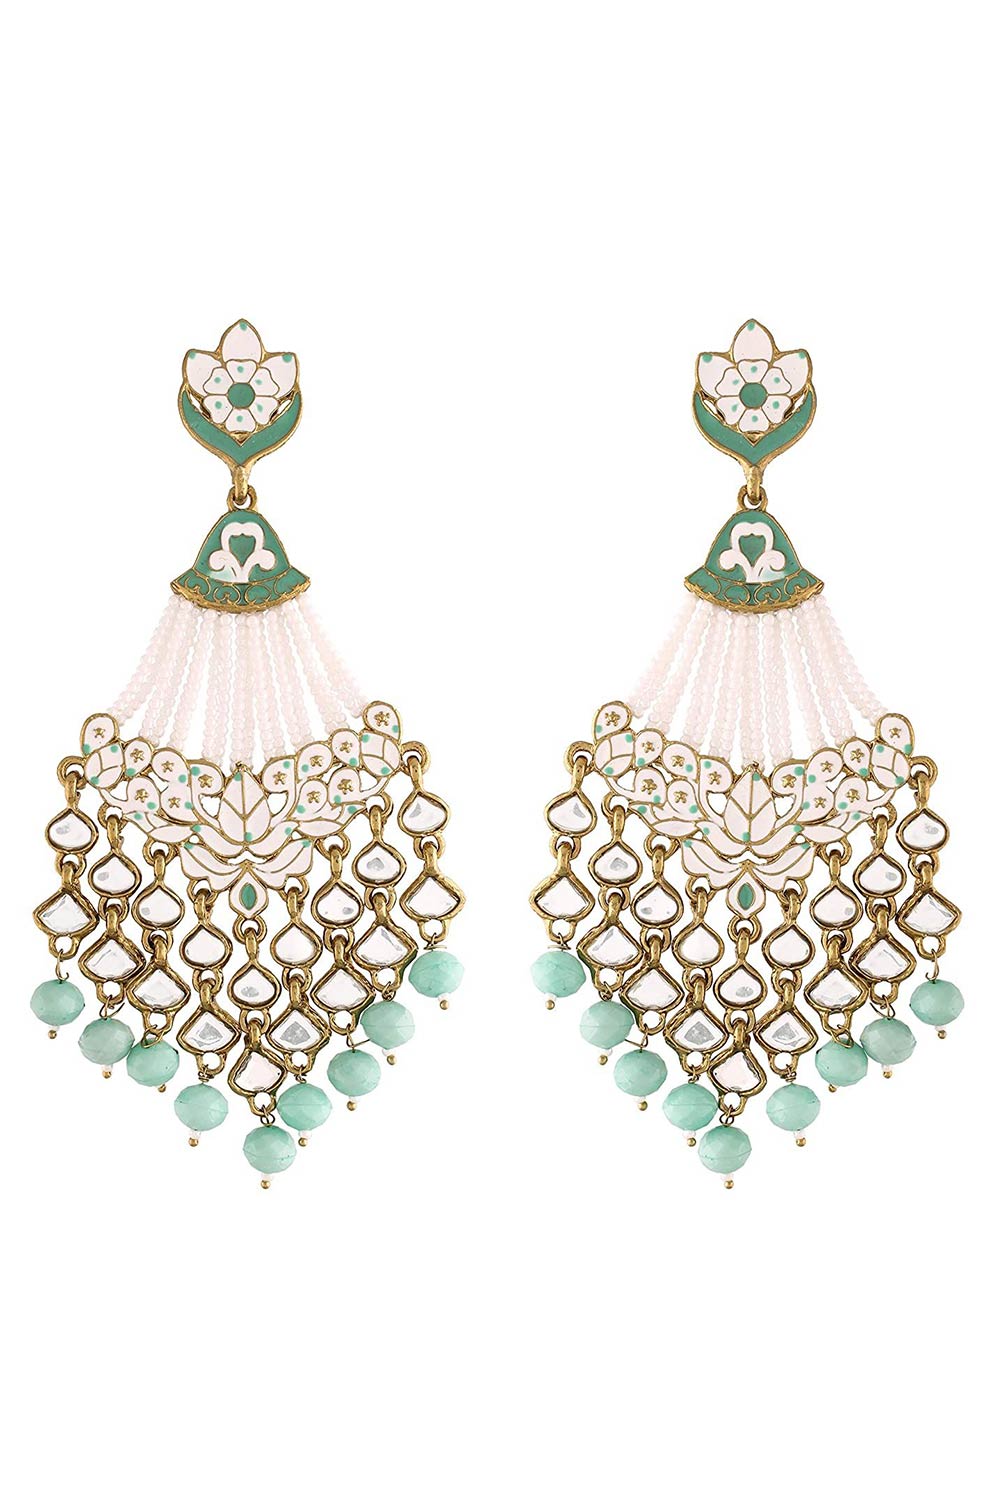 Buy Women's Alloy Large Dangle Earring in Turquoise Online